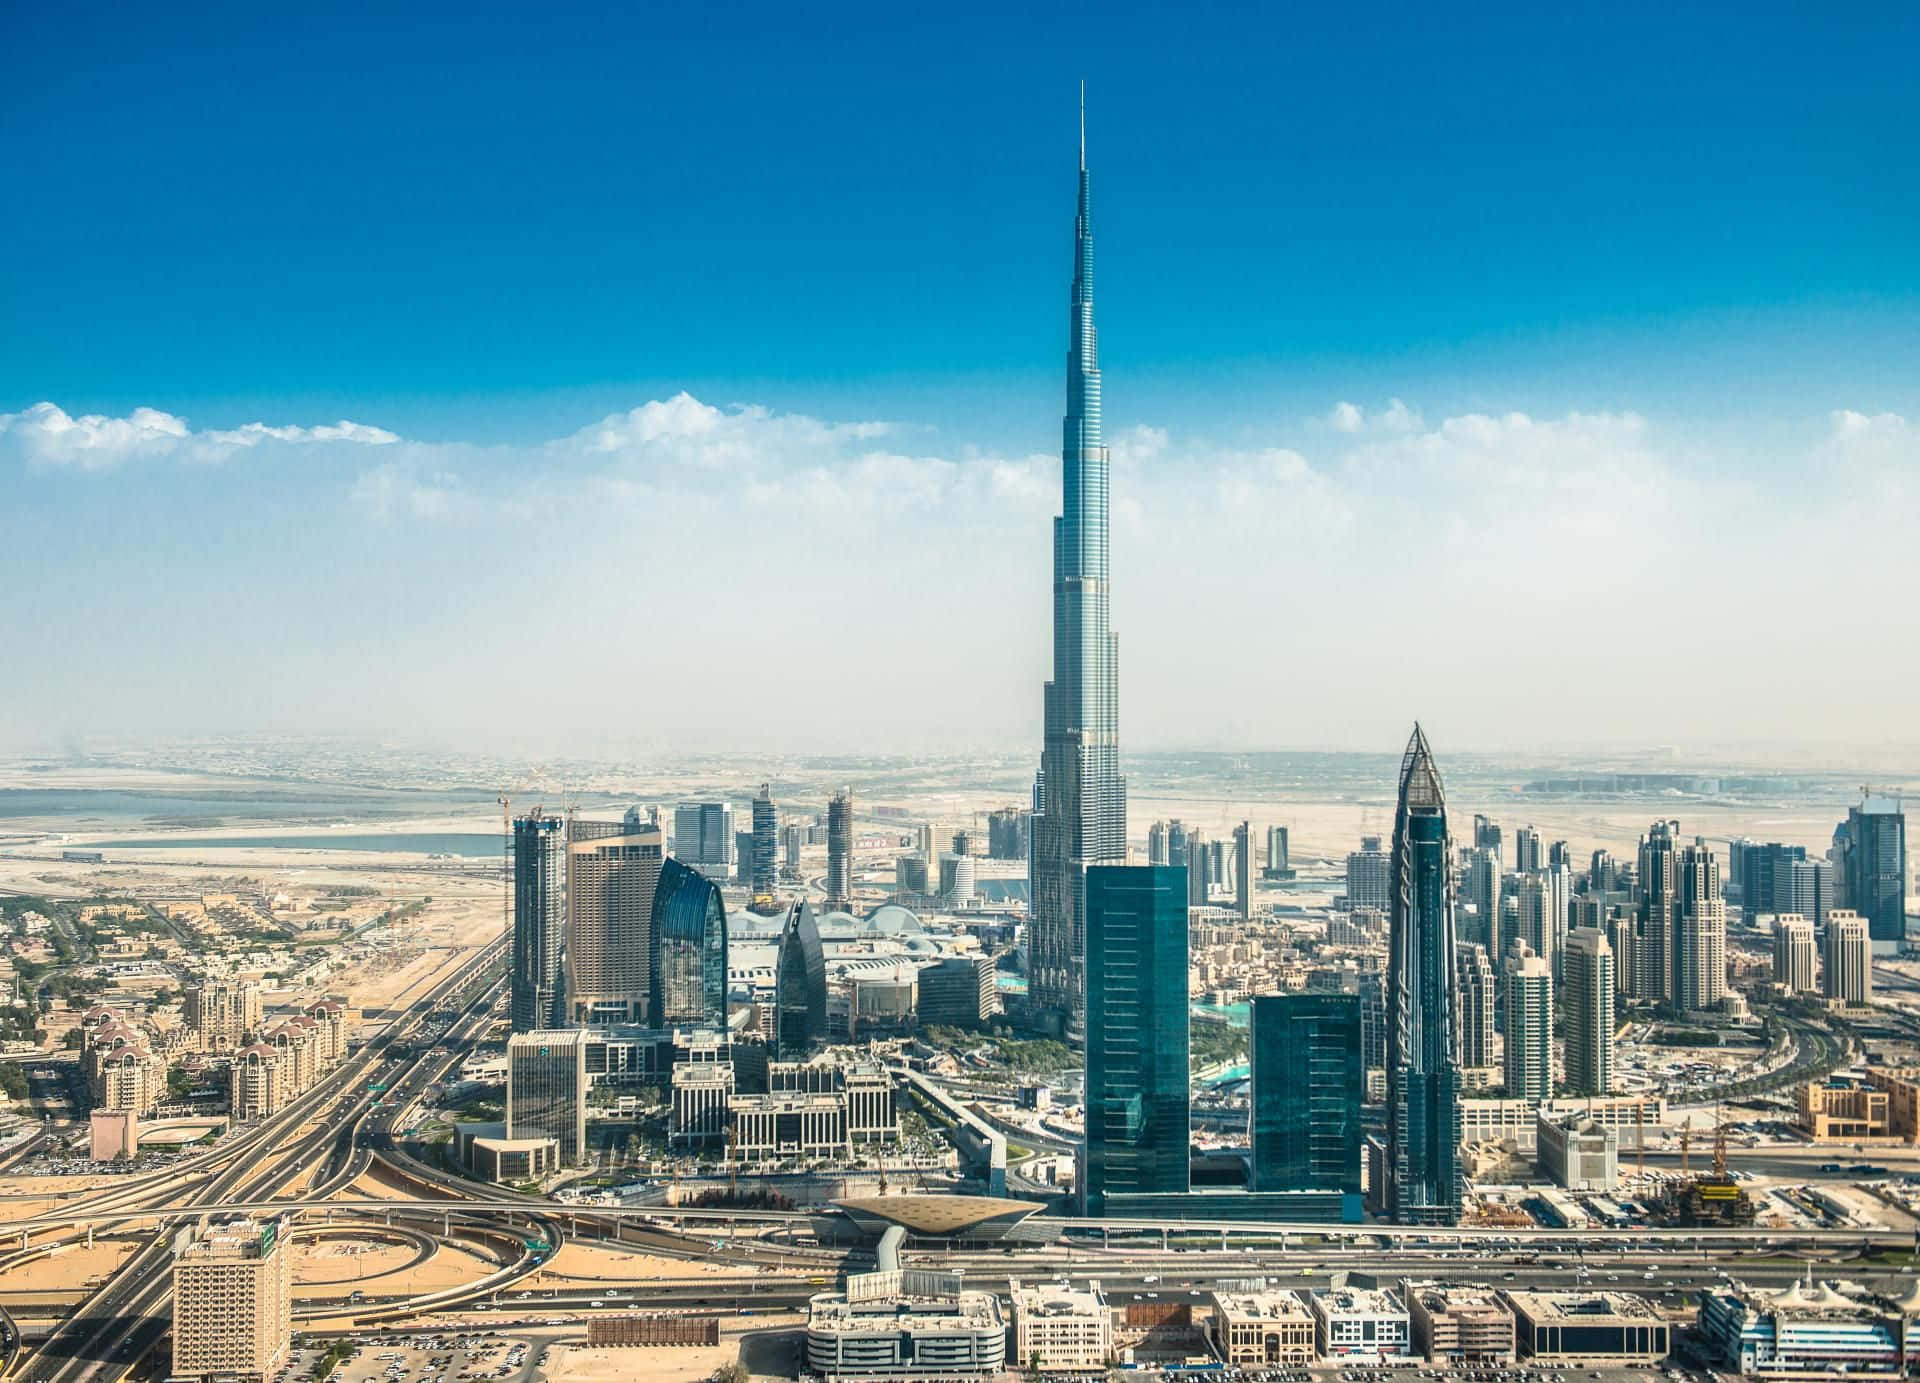 Breathtaking view of the Burj Khalifa, world's tallest structure